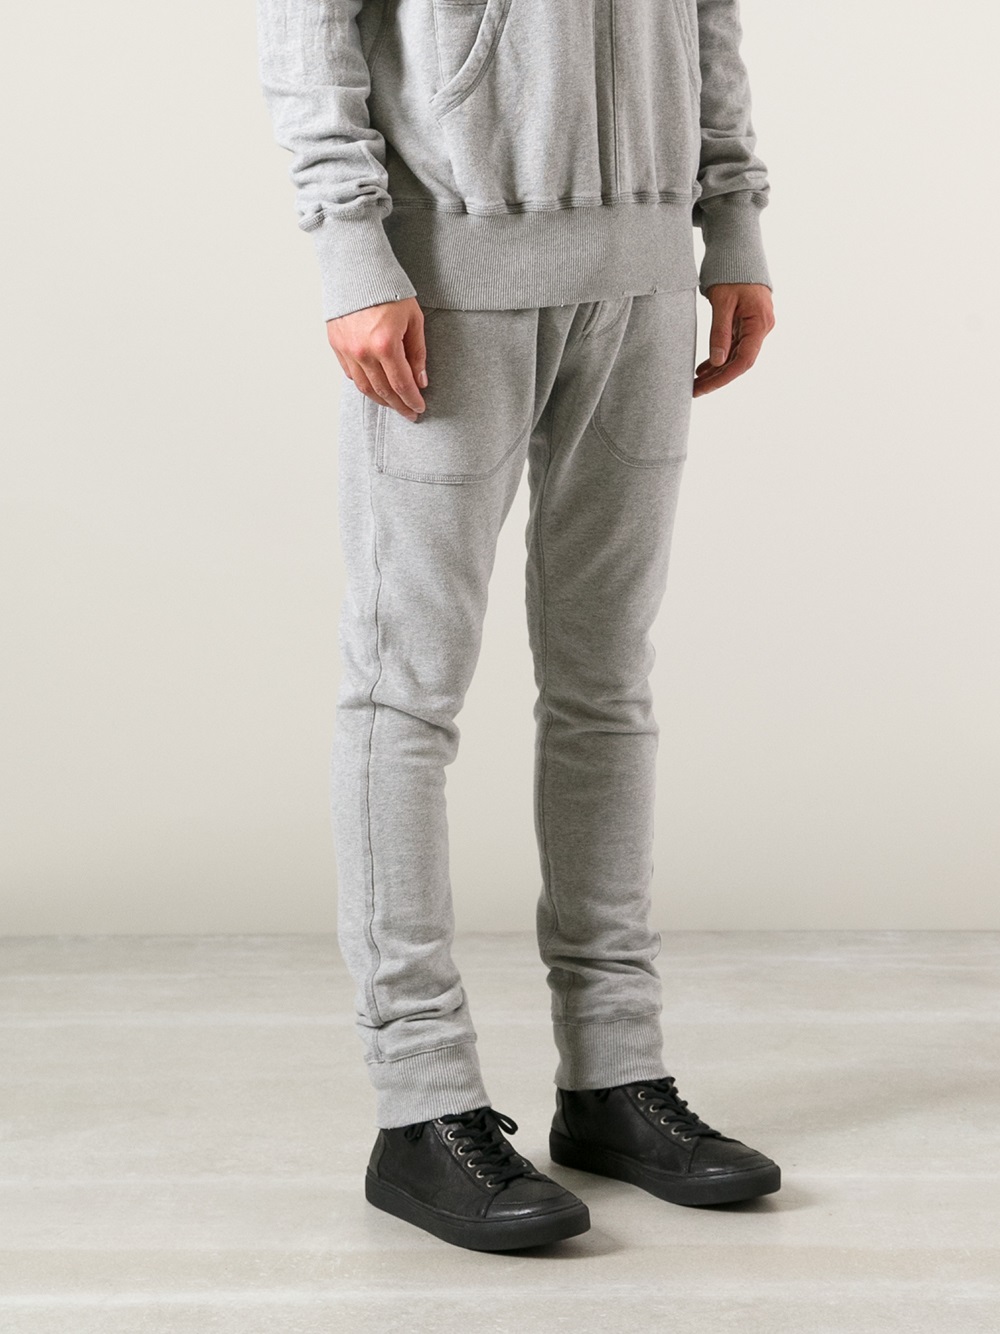 Balmain Tracksuit Trouser in Grey (Grey) for Men - Lyst